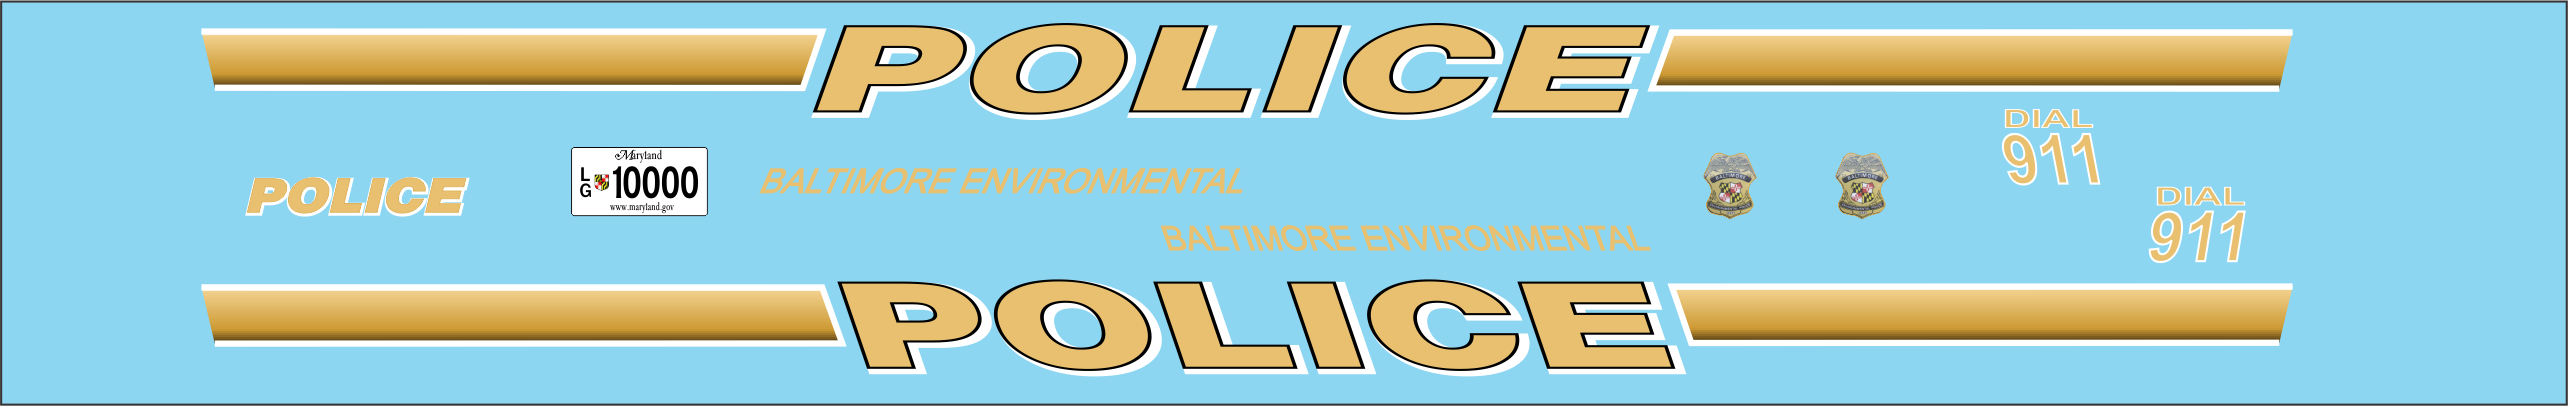 Baltimore Environmental Police Department 1/43 waterslide decals